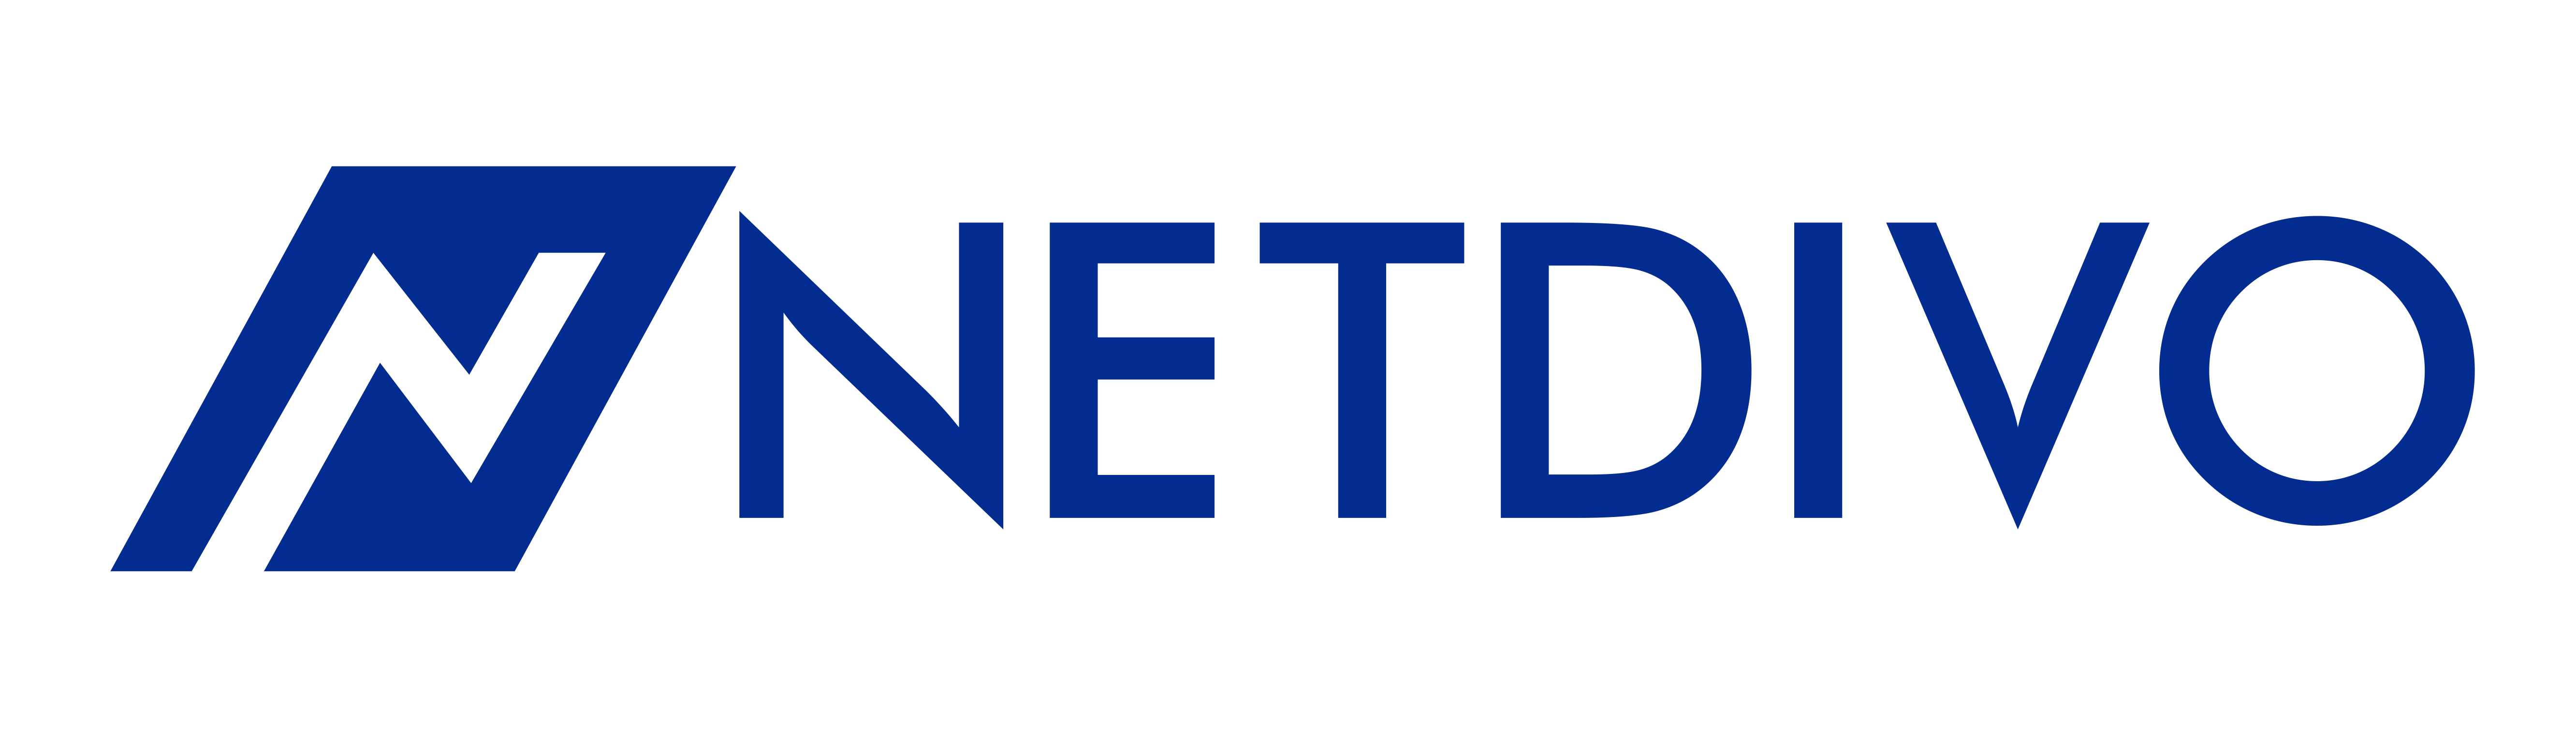 netdivo logo blue cropped